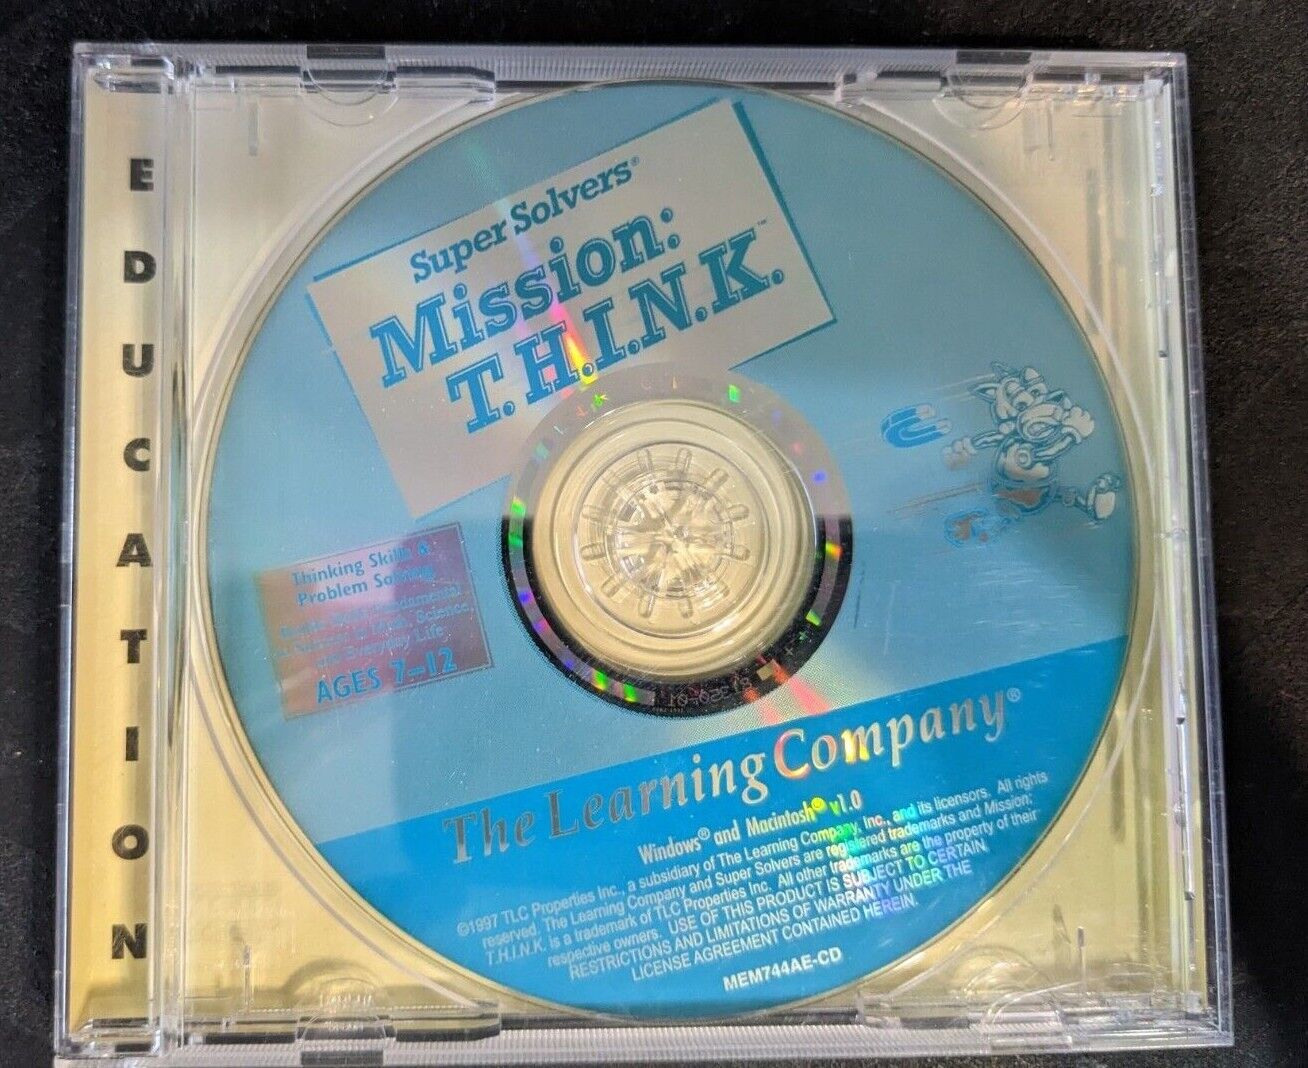 Super Solvers Mission THINK PC Game CDrom Thinking Skills Educational V1.0 1997